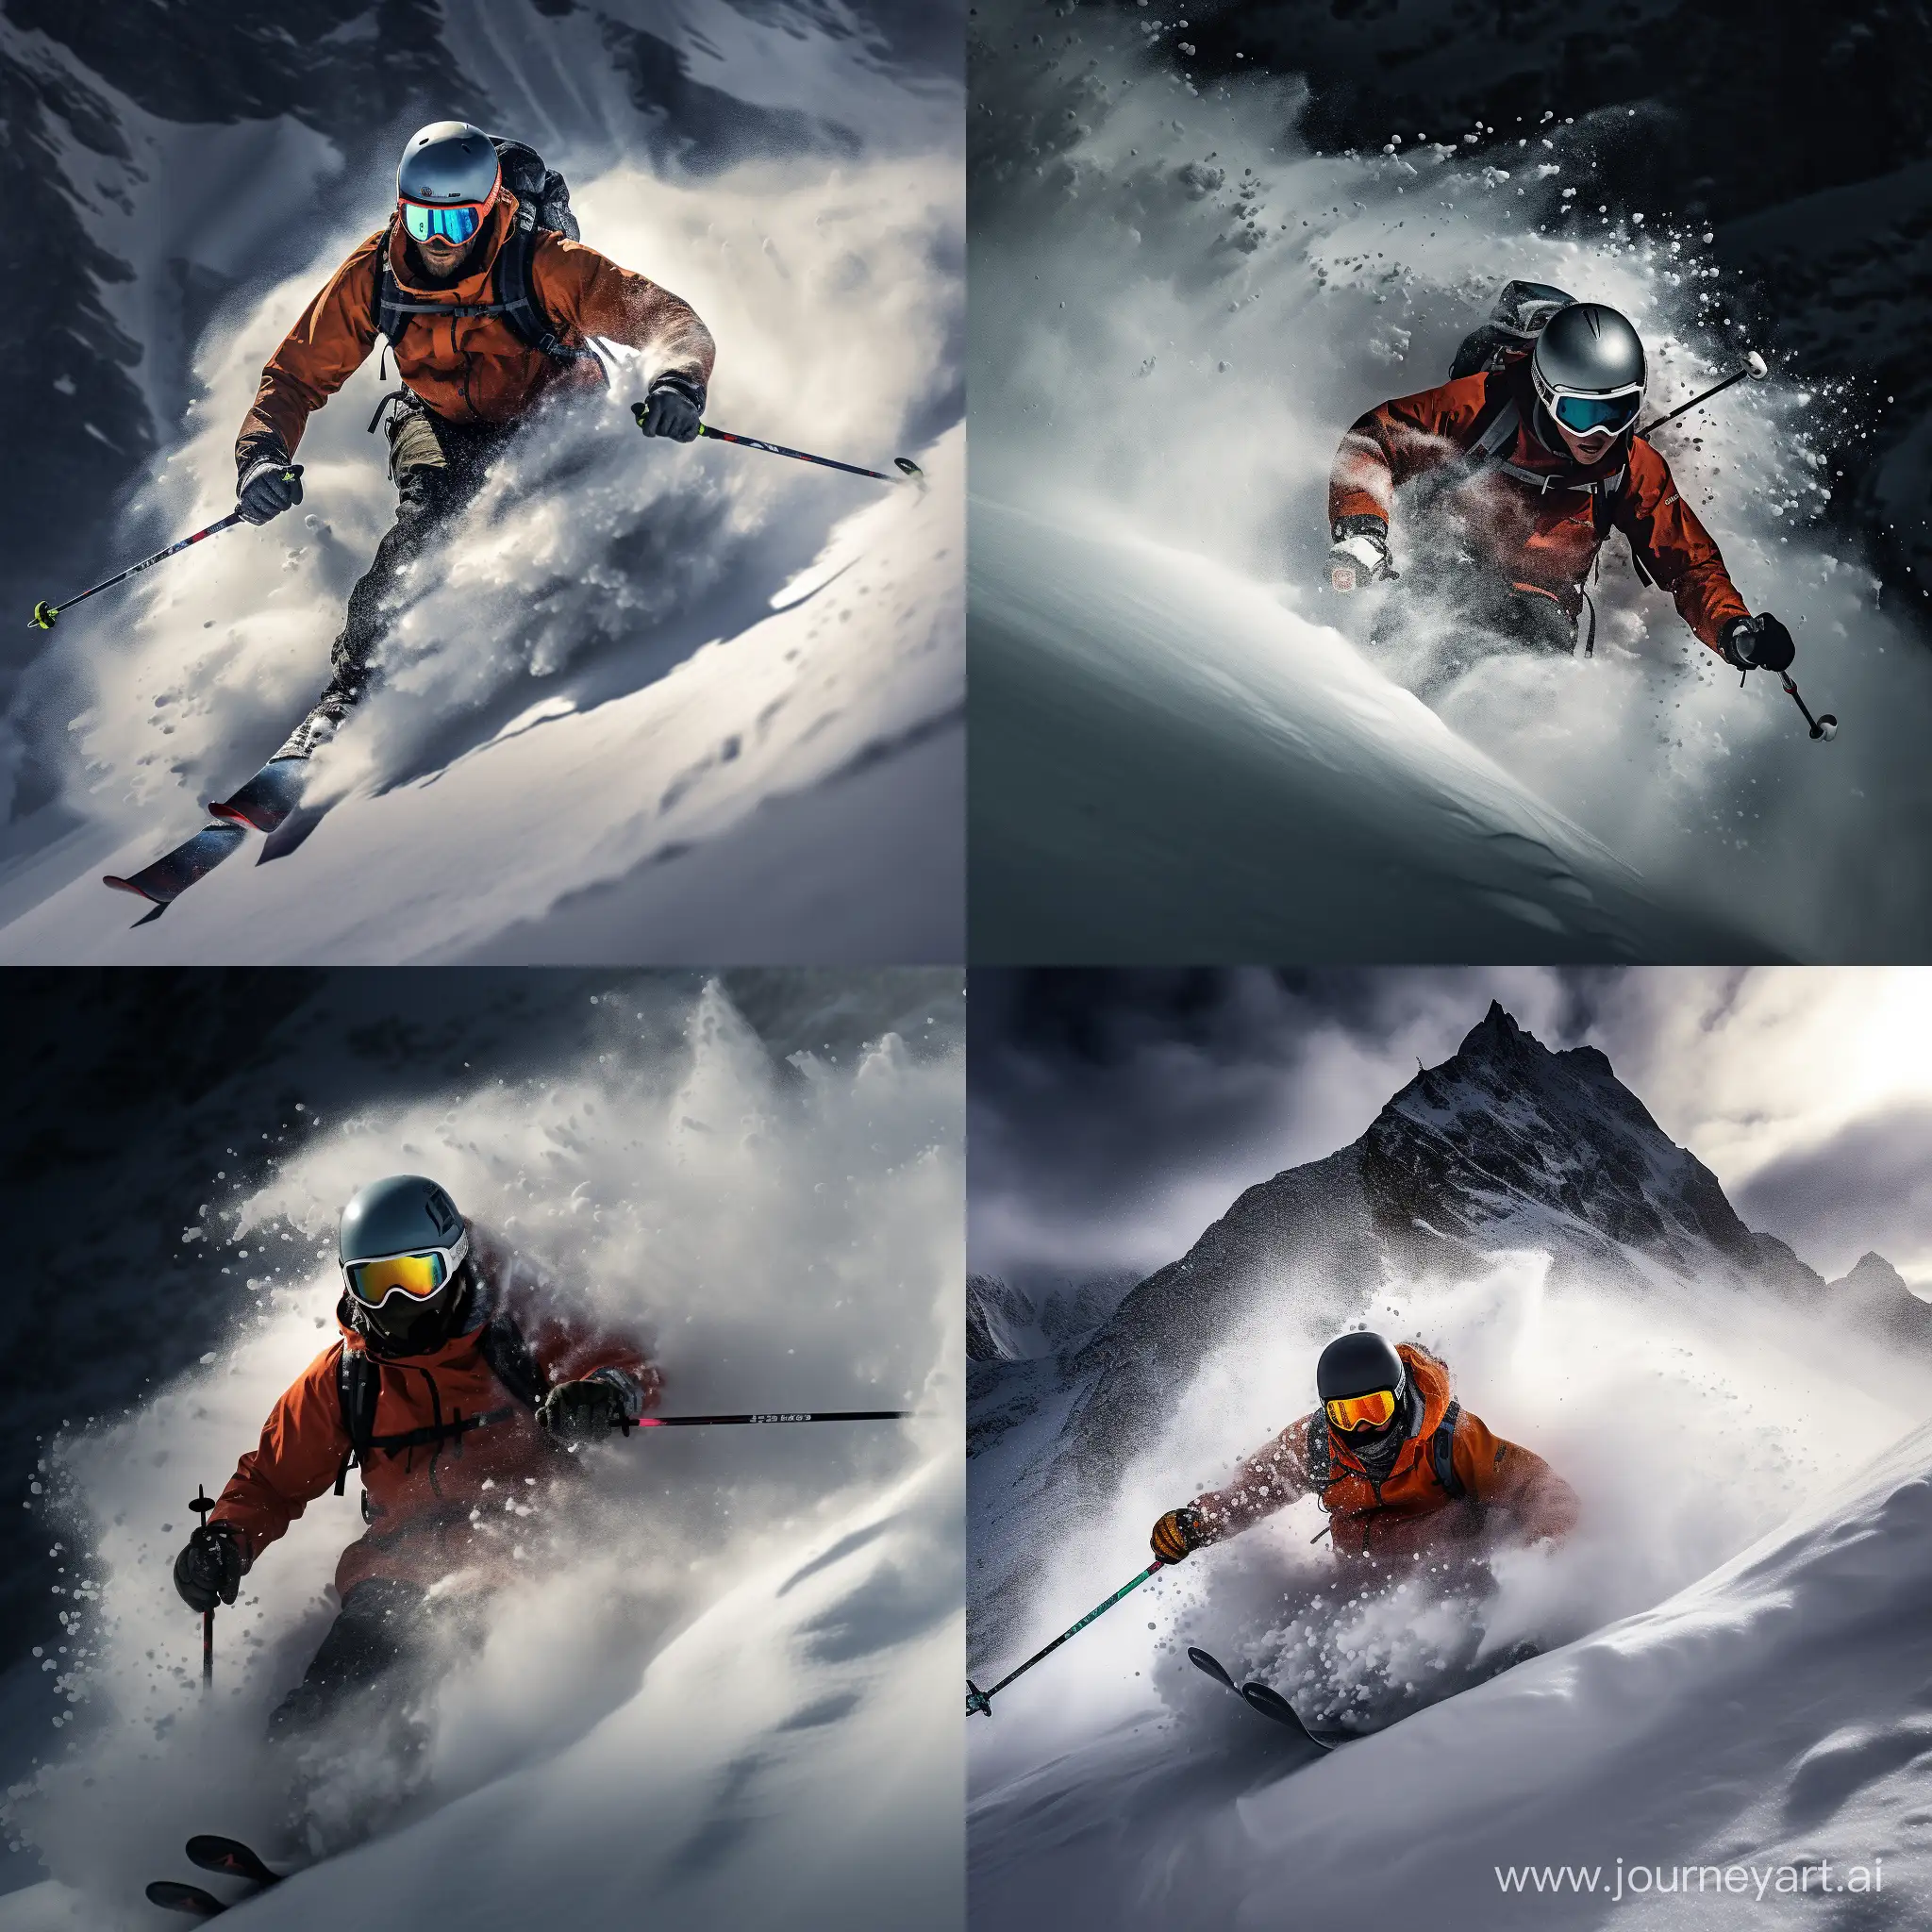 Alpine-Skier-Enjoying-Abundant-Powder-in-the-Alps